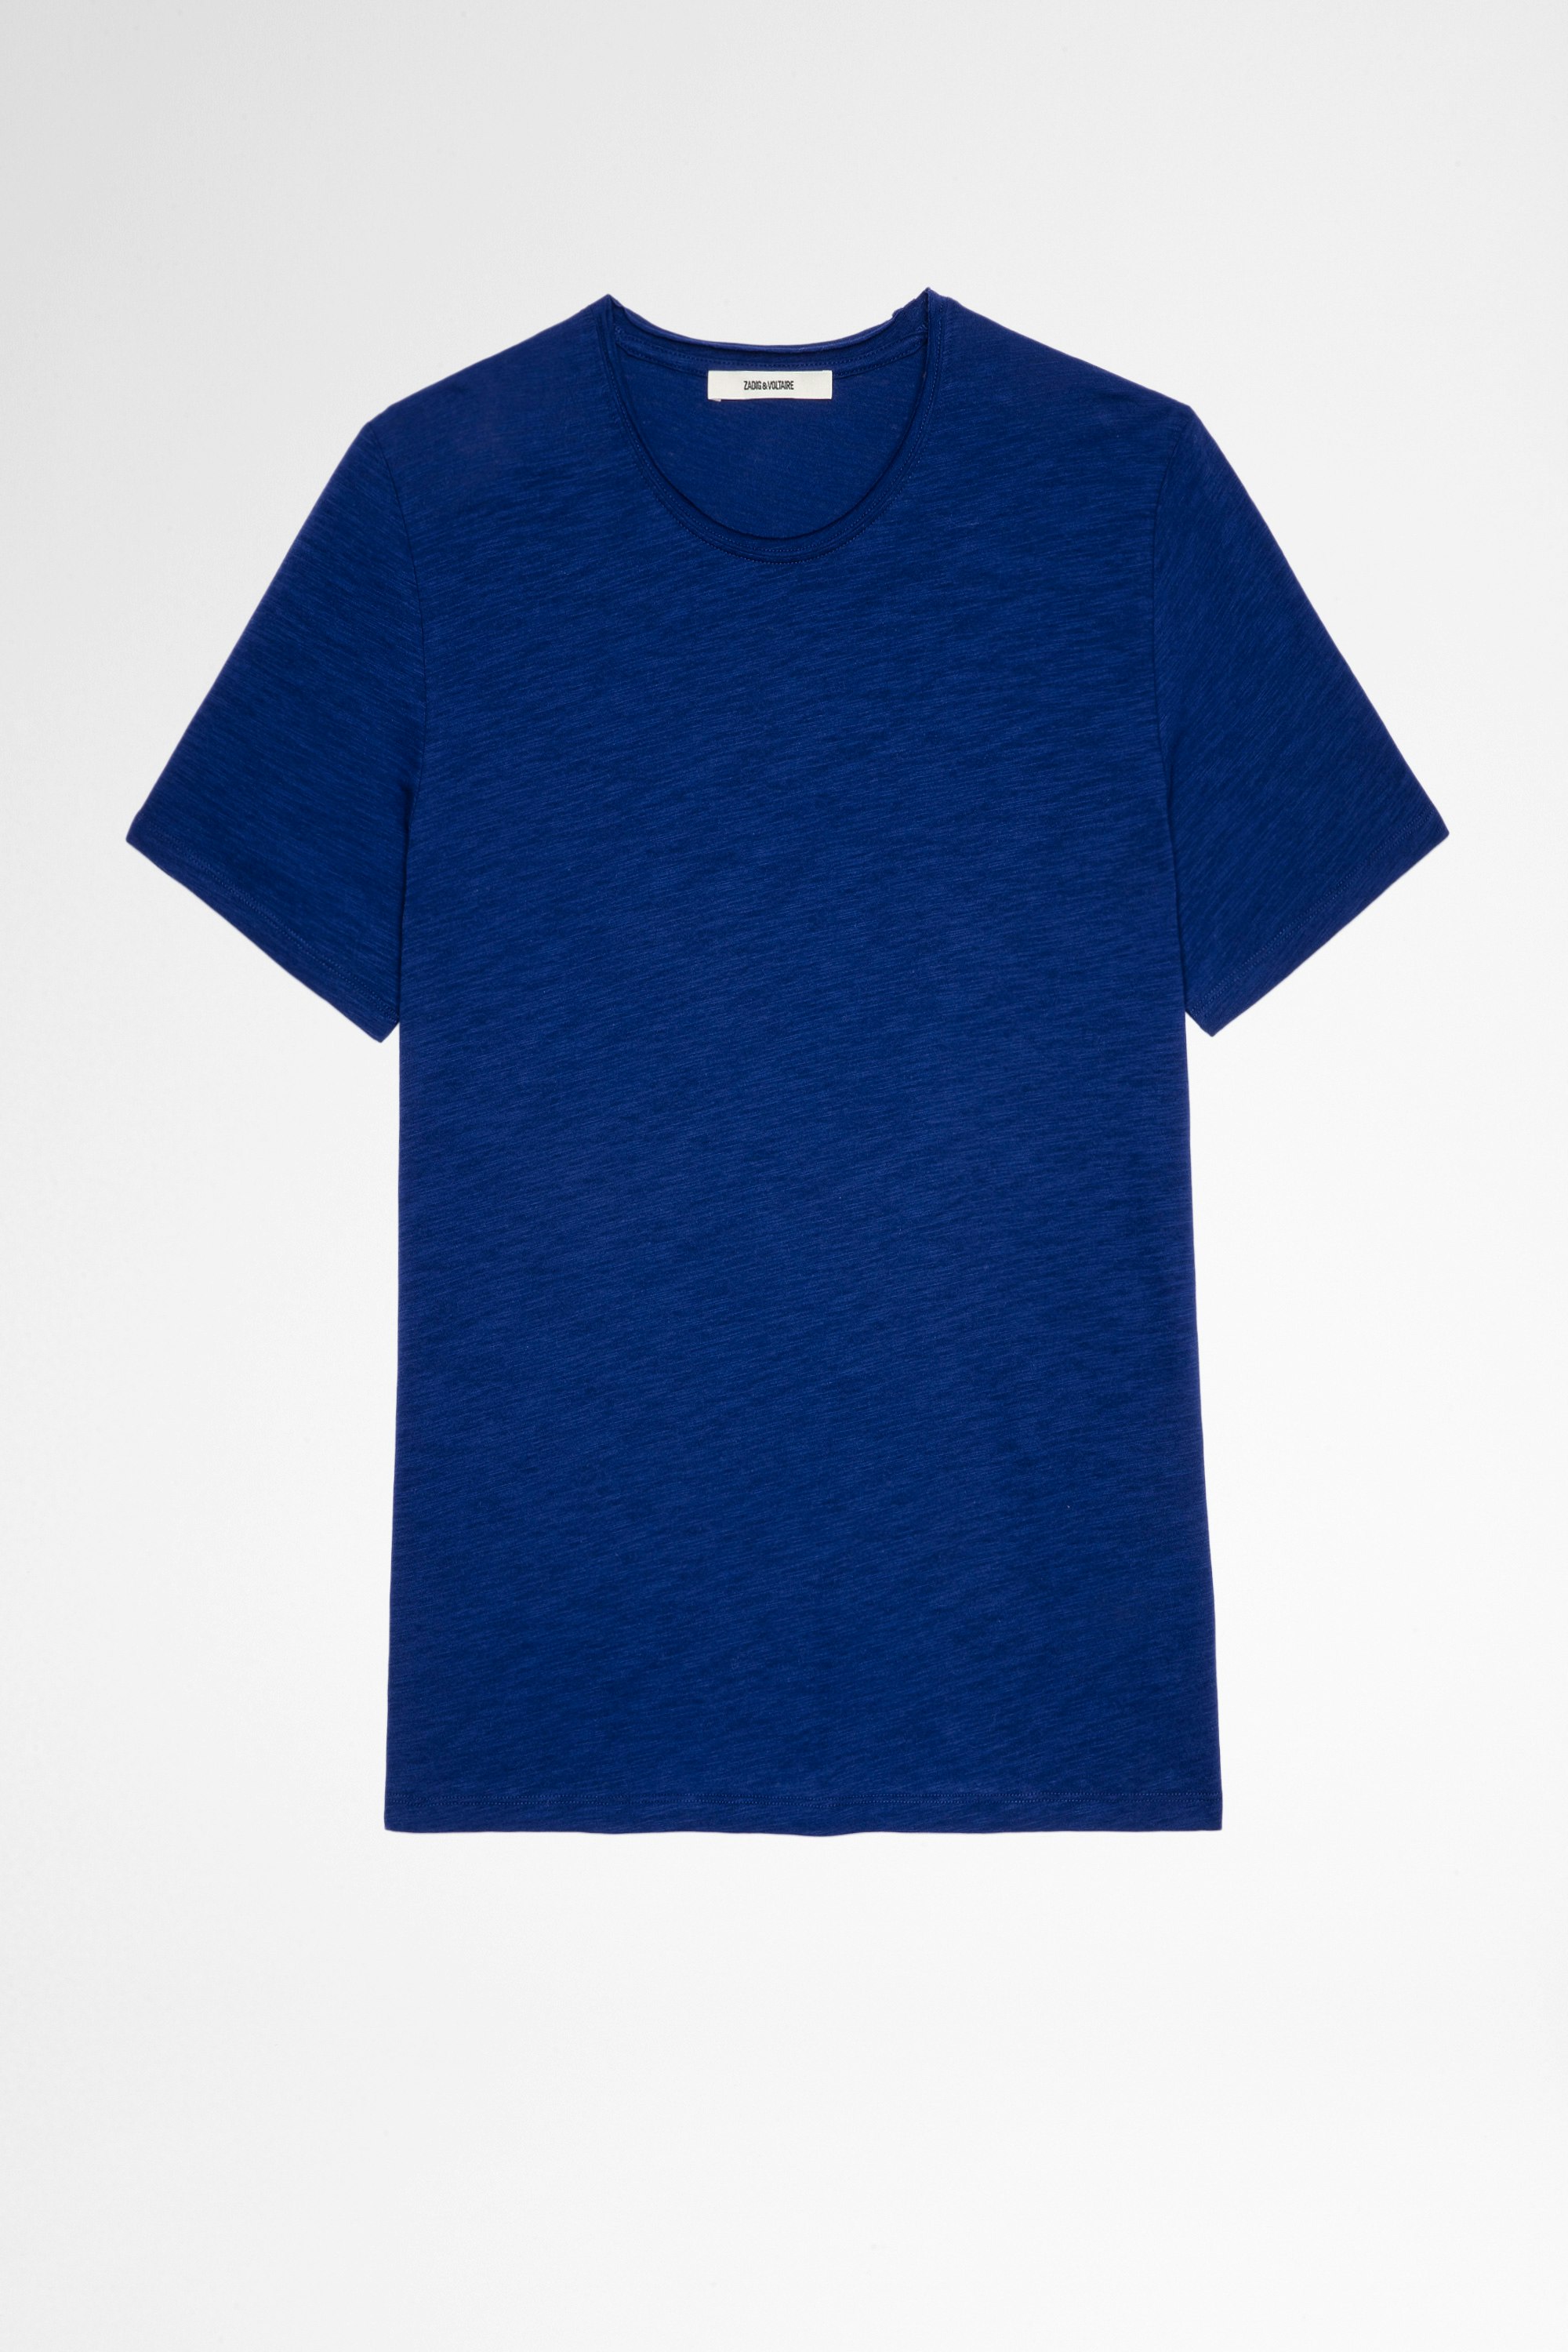 Toby Slub T-Shirt Men's short-sleeved t-shirt in royal blue cotton